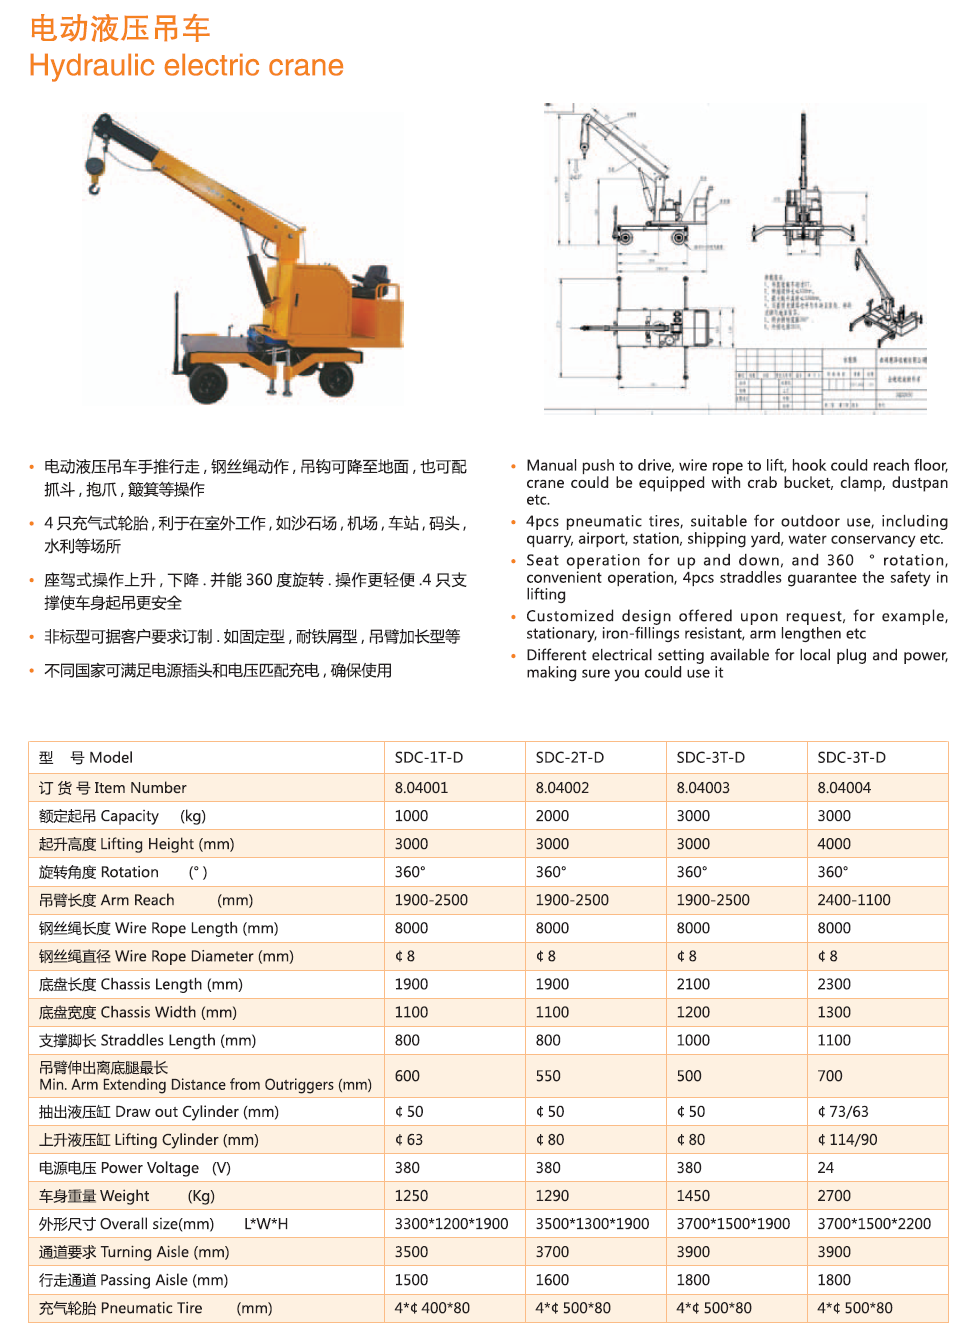 Hydraulic electric crane.png